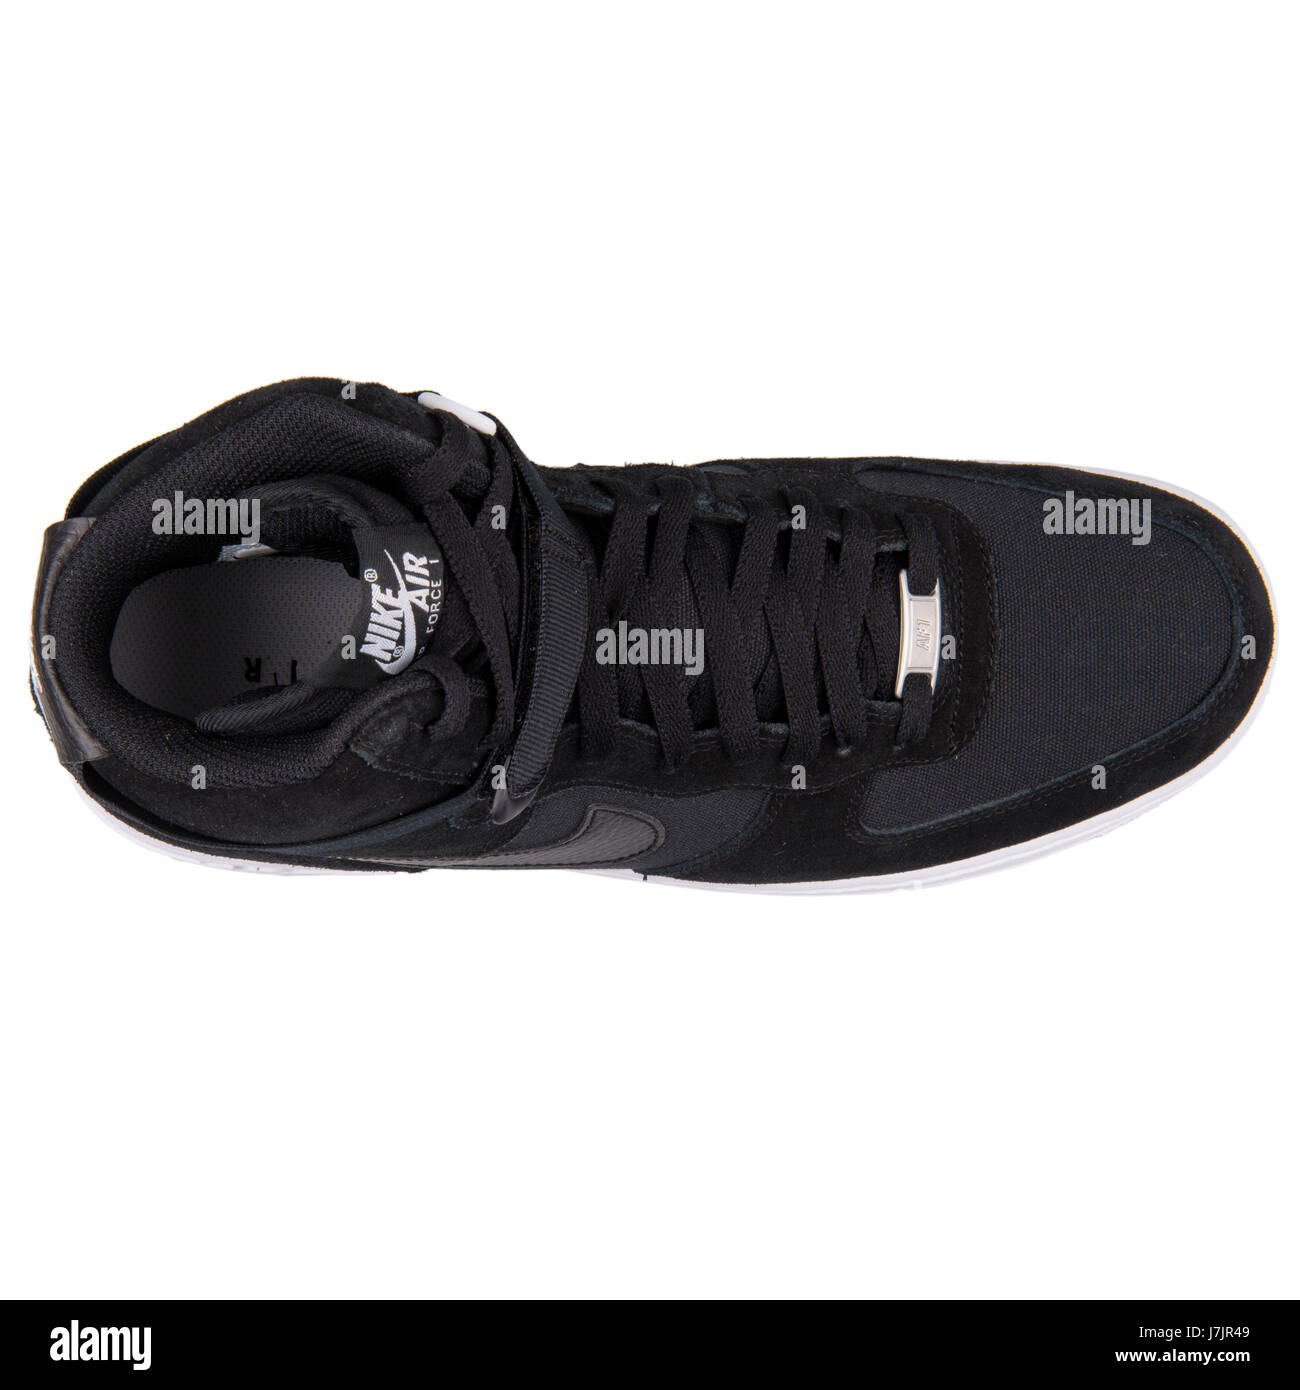 Nike Air Force 1 High ' 07 schwarze Männer Leder-Sneakers - 315121-033  Stockfotografie - Alamy